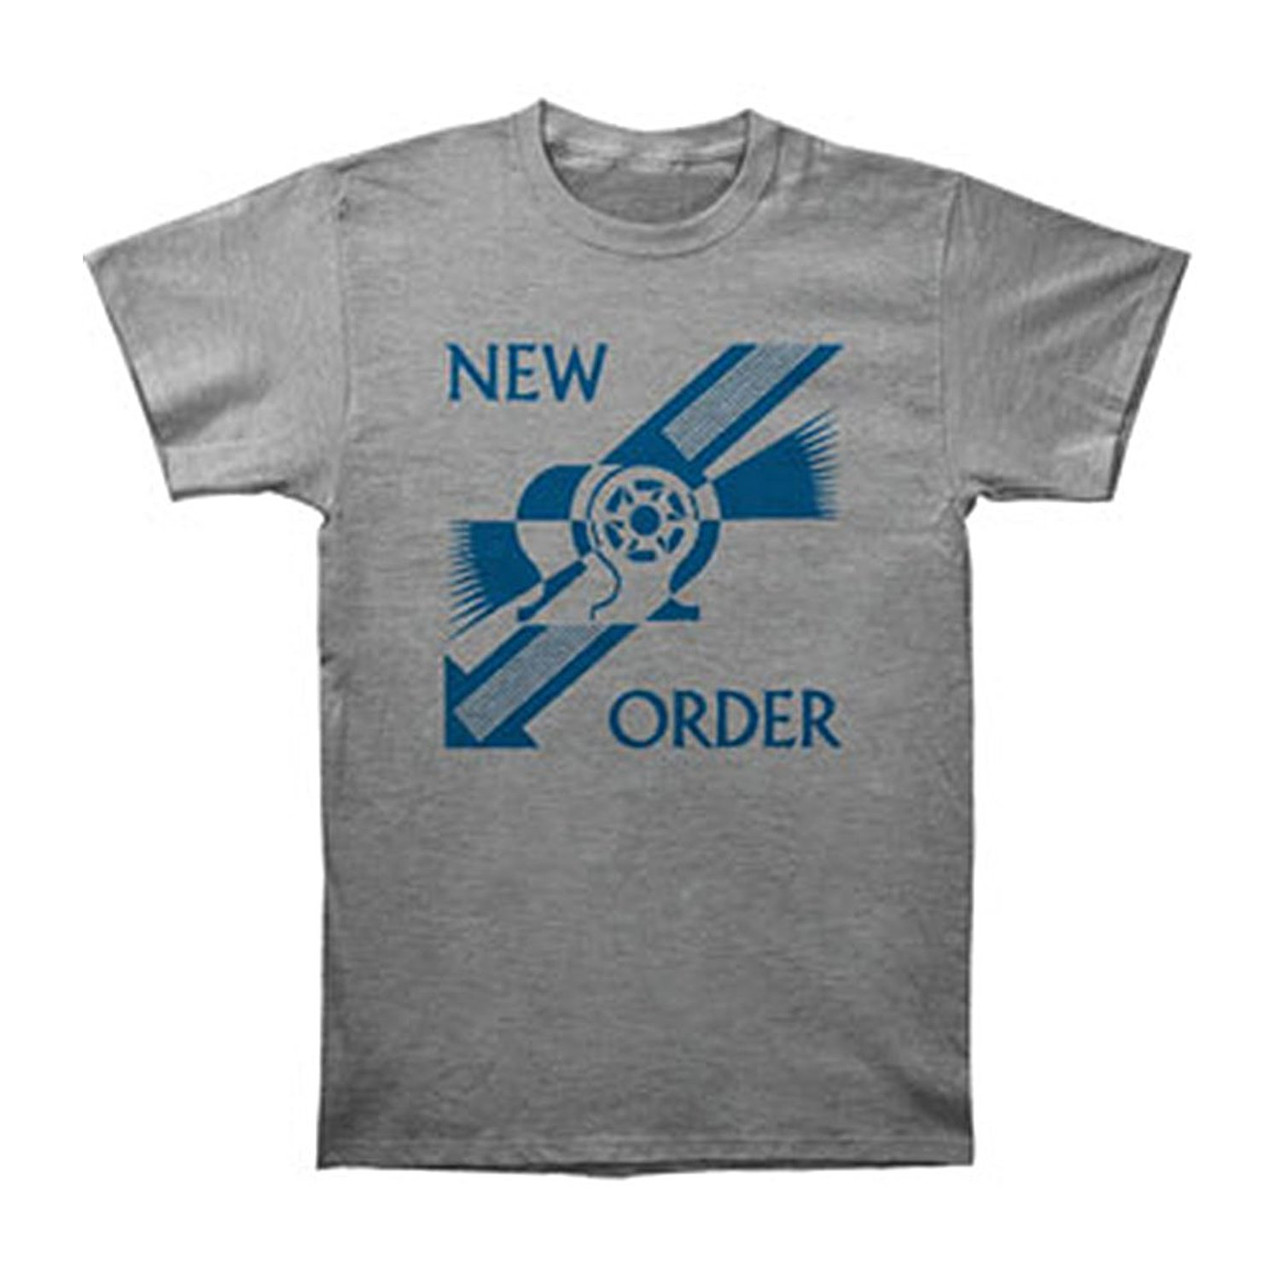 New Order TShirt Everything's Gone Green Merch2rock Alternative